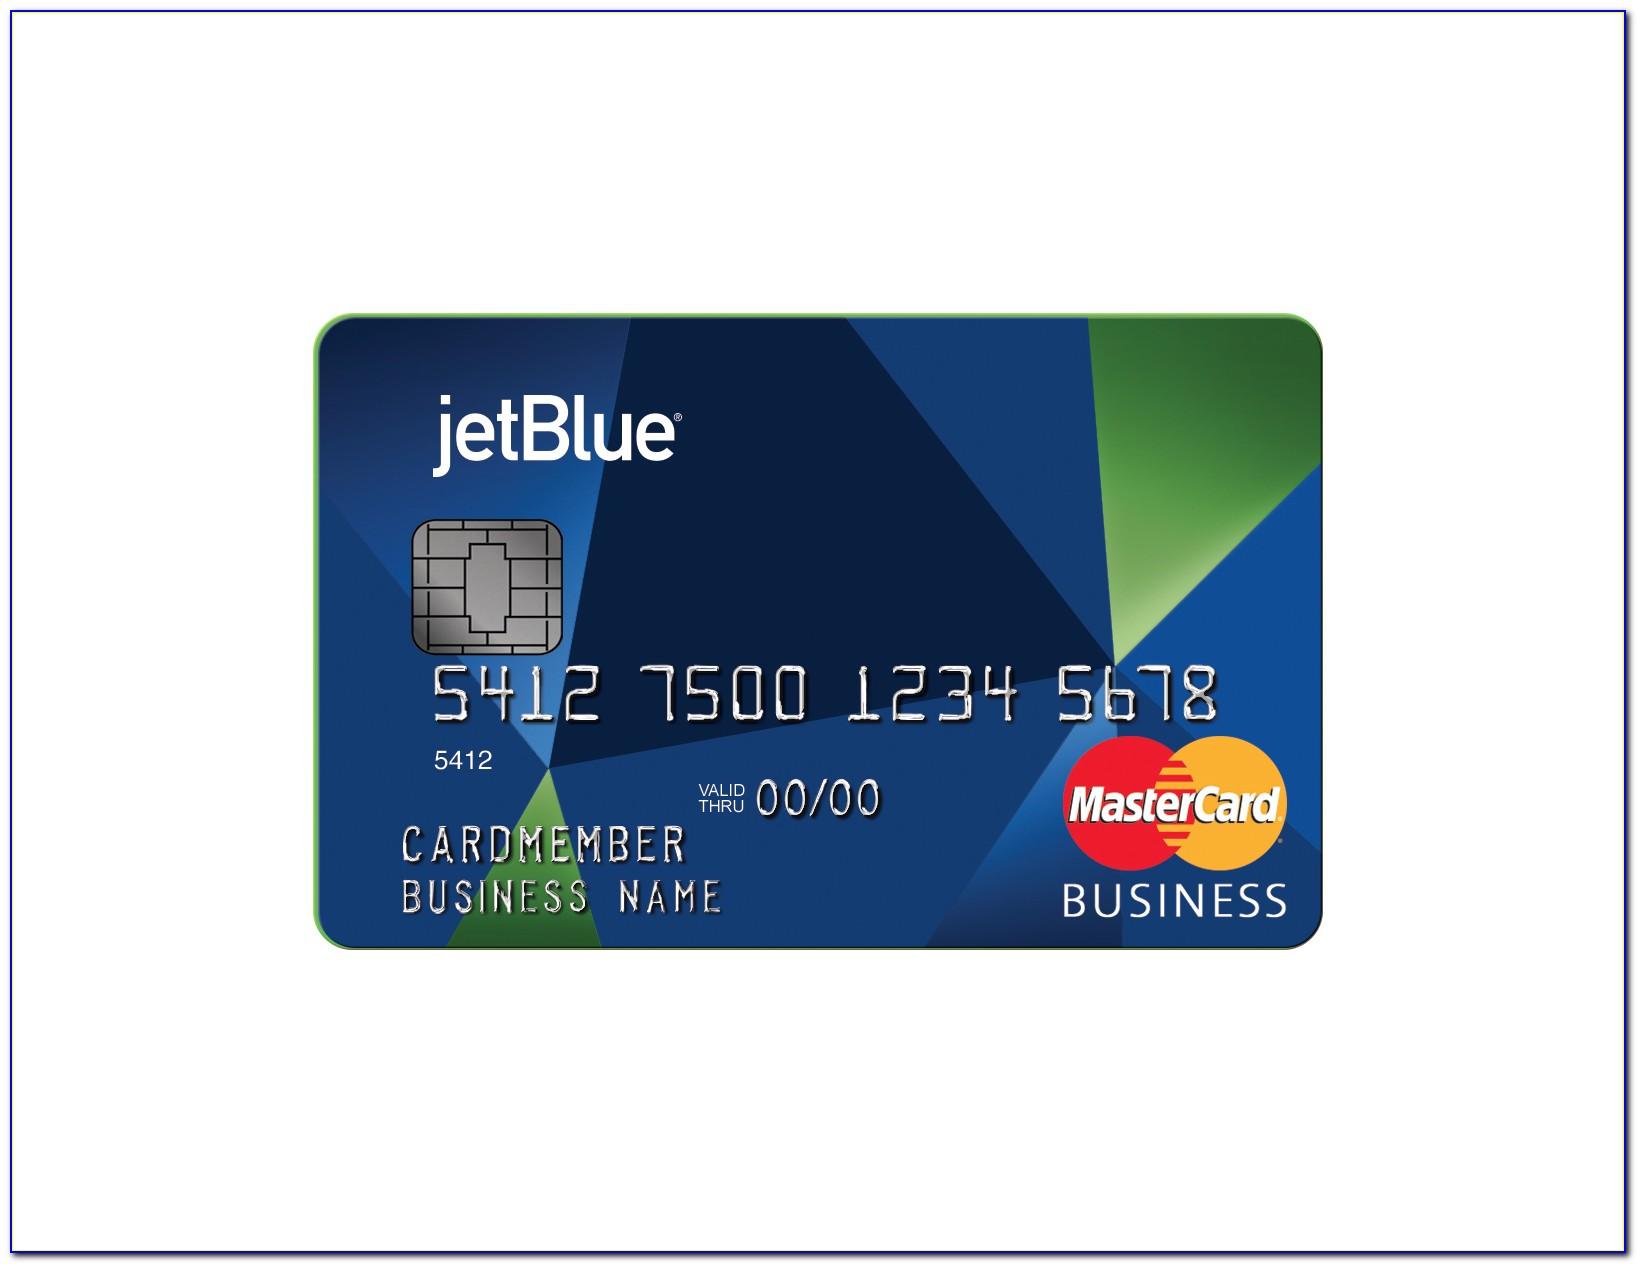 Jetblue Business Card Login